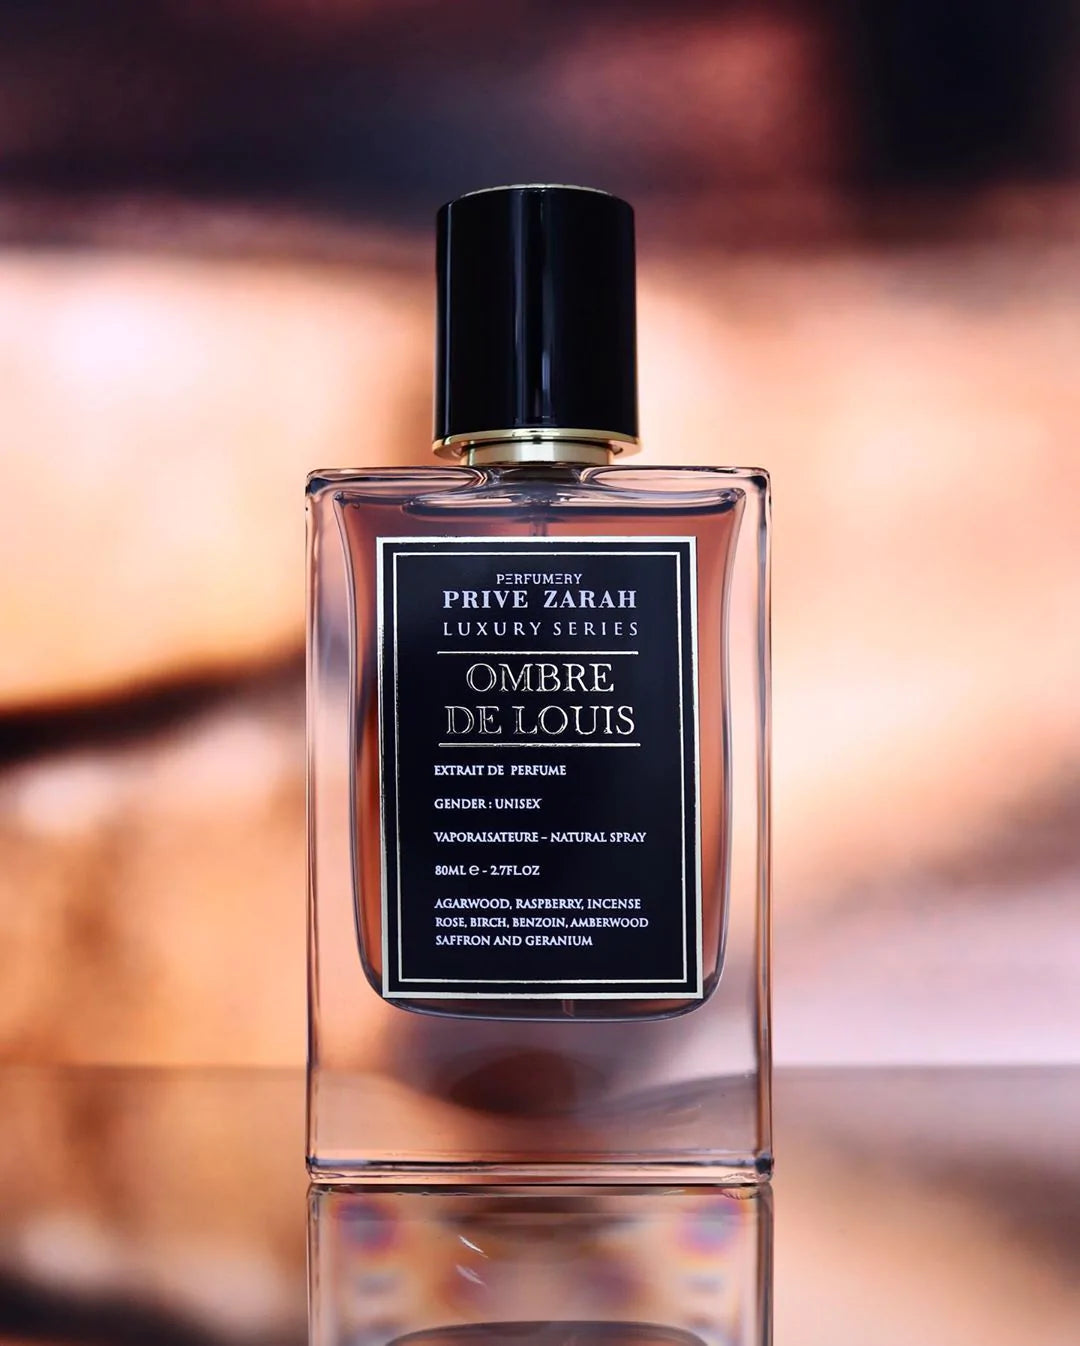 Unboxing a popular Louis Vuitton ombre nomade dupe! #fragrance #fragra, louisvuitton